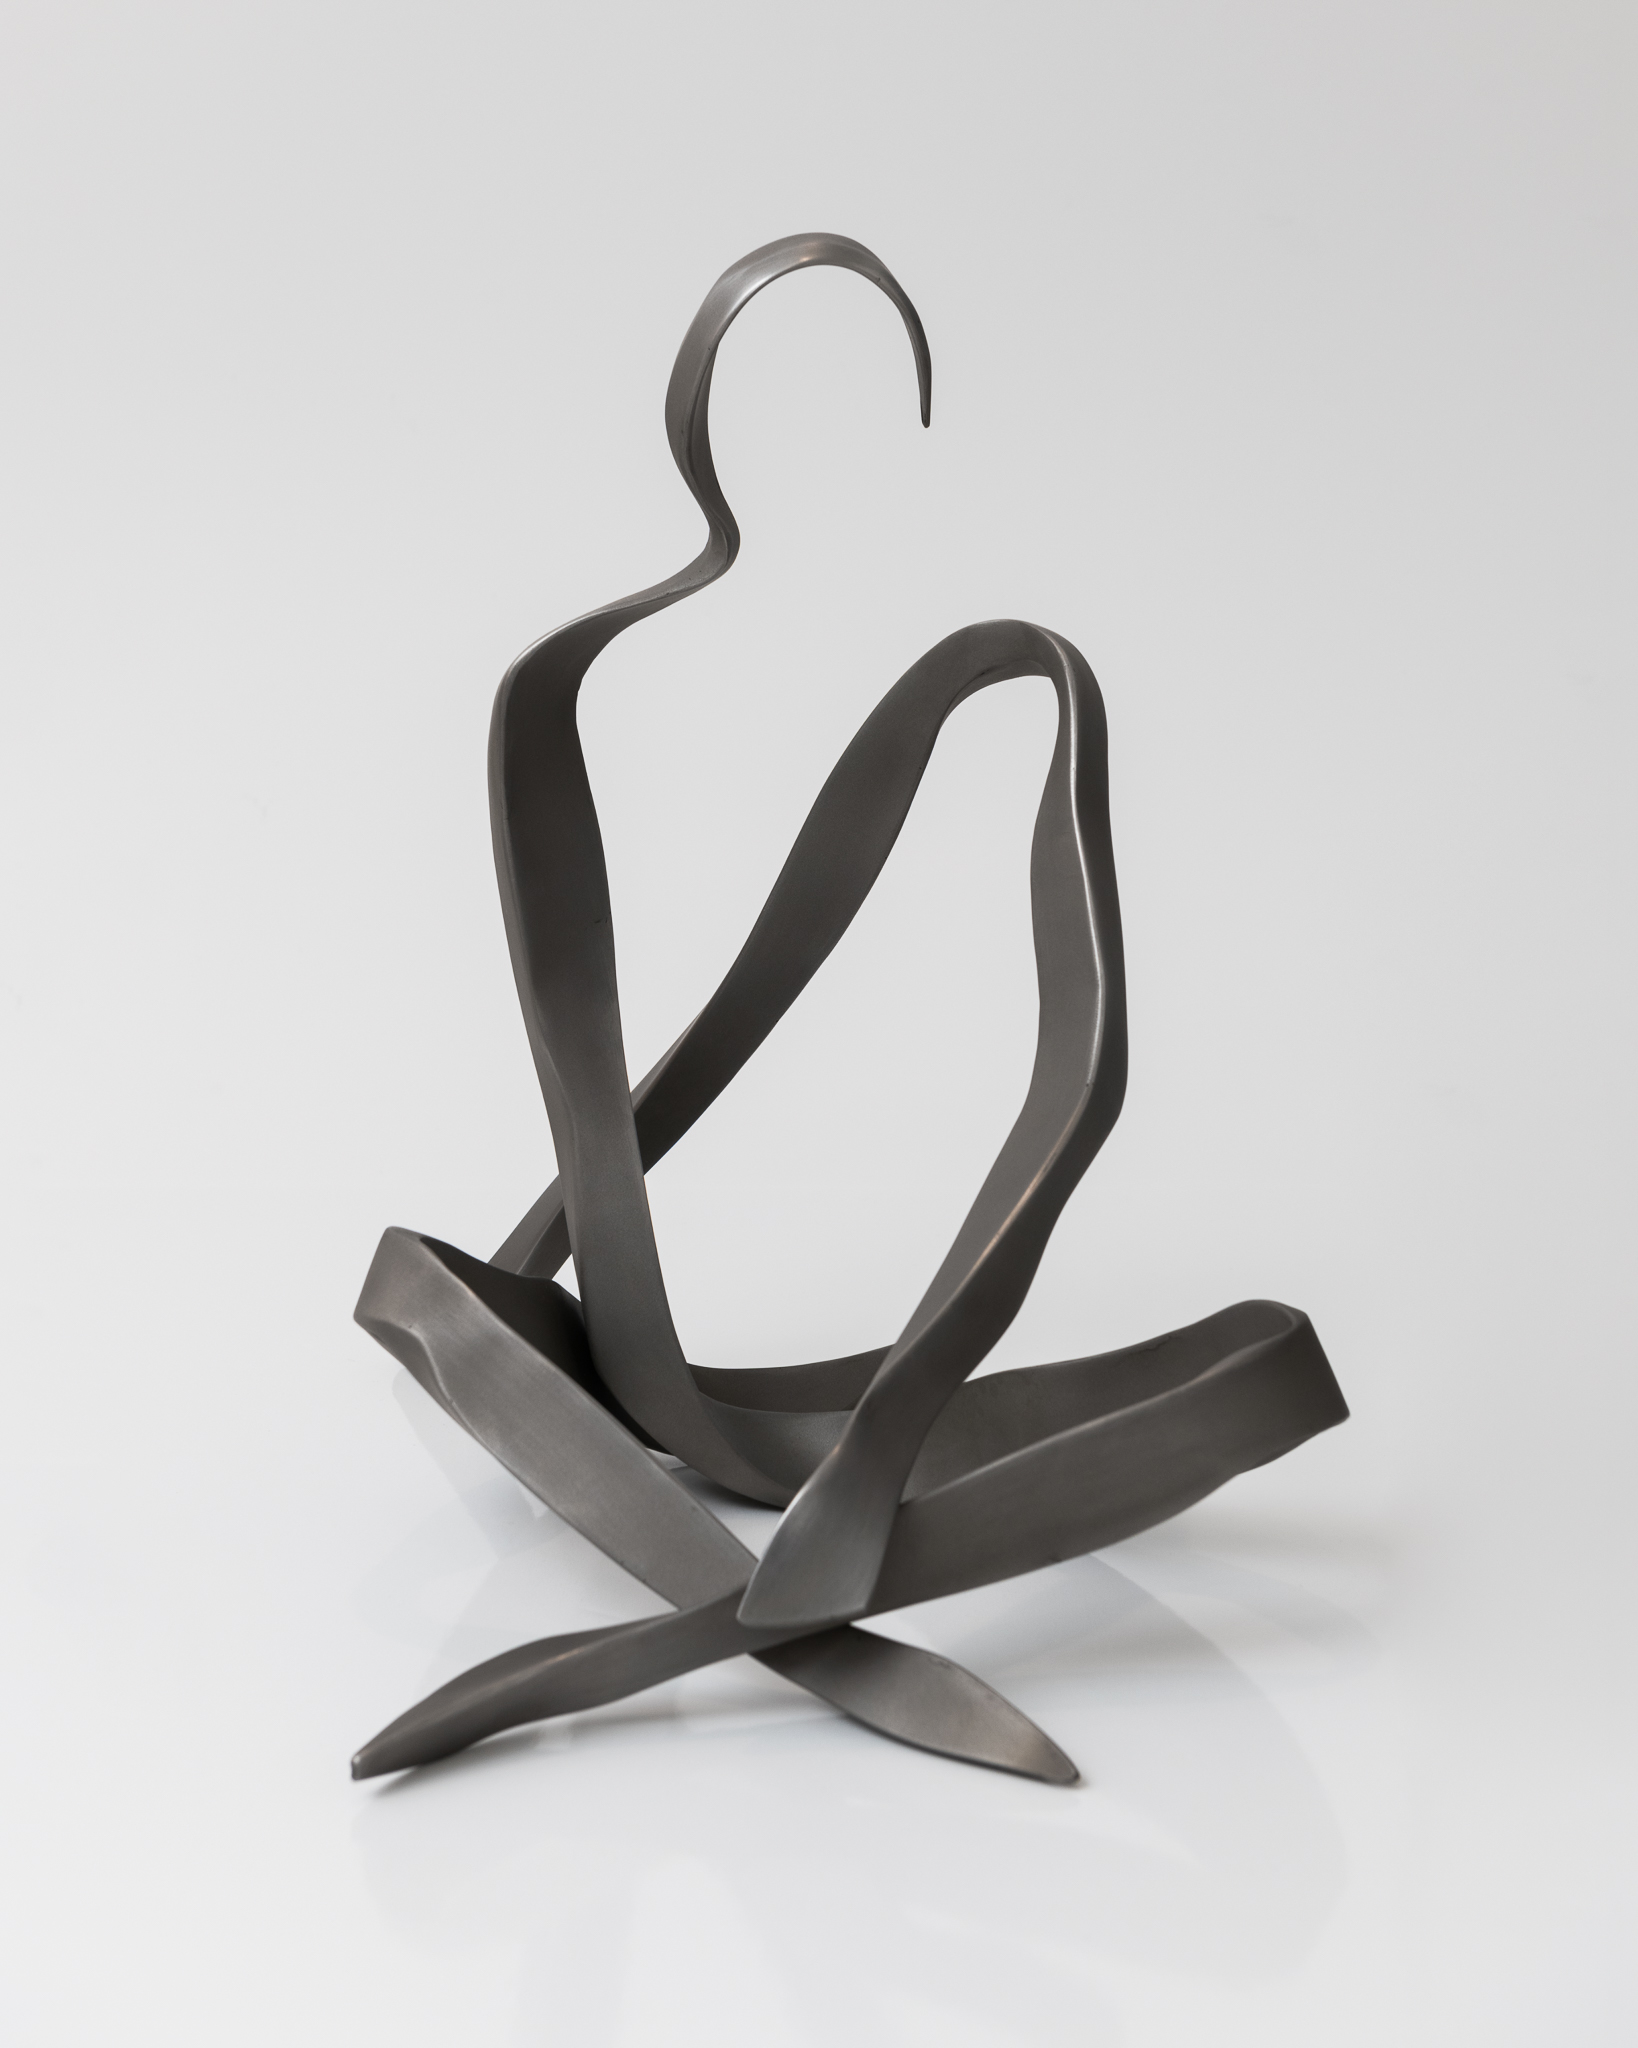 Matt Turley' "Contemplation" Marine-Grade Stainless Steel original sculpture art for sale product